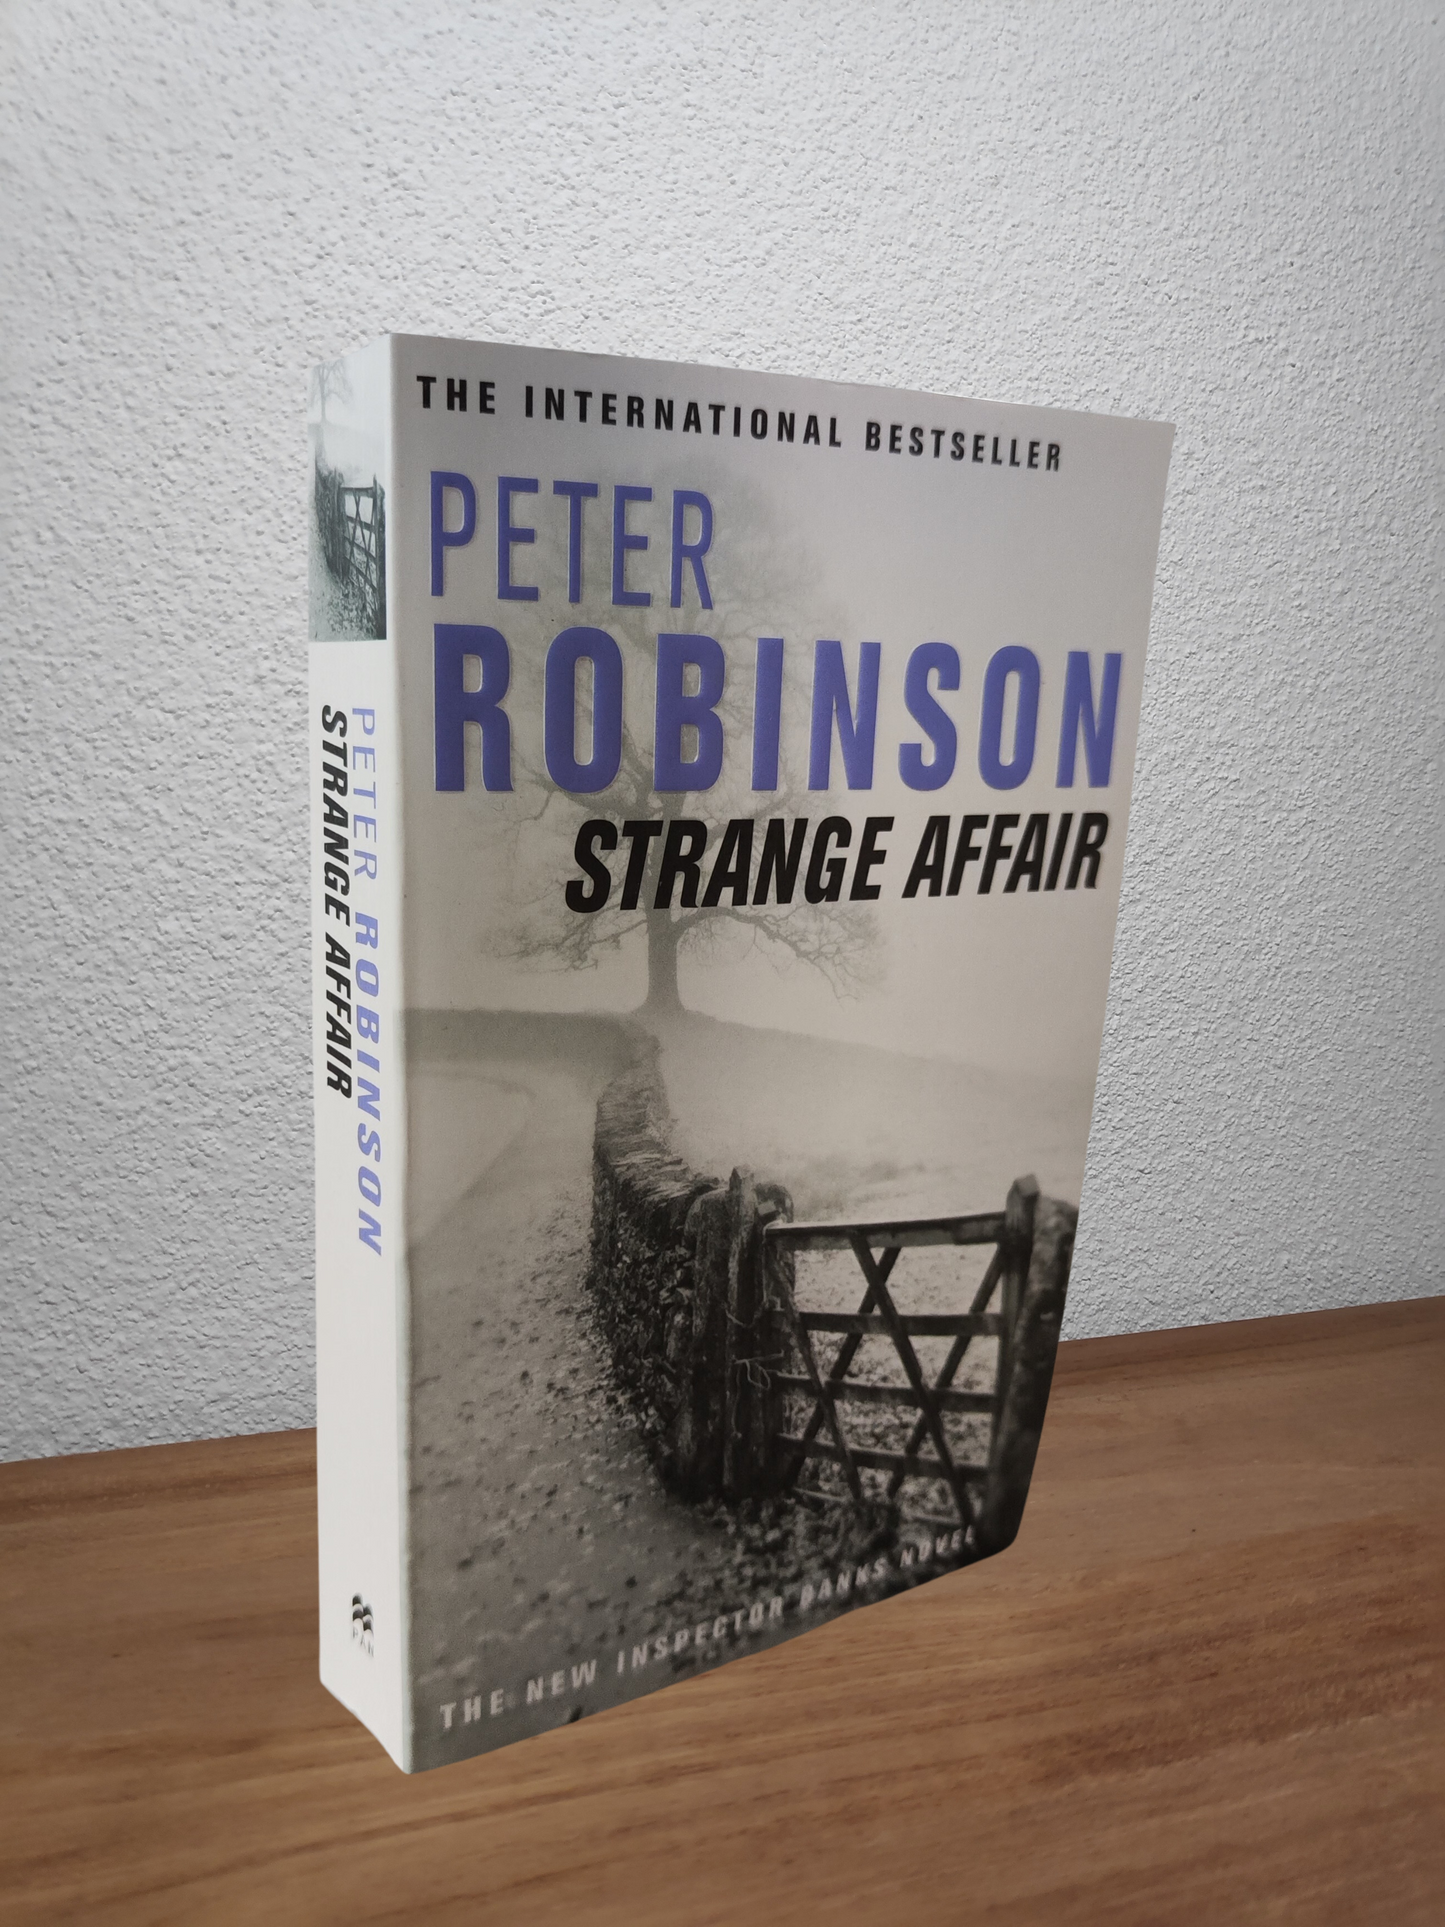 Peter Robinson - Strange Affair (Inspector Banks #15)